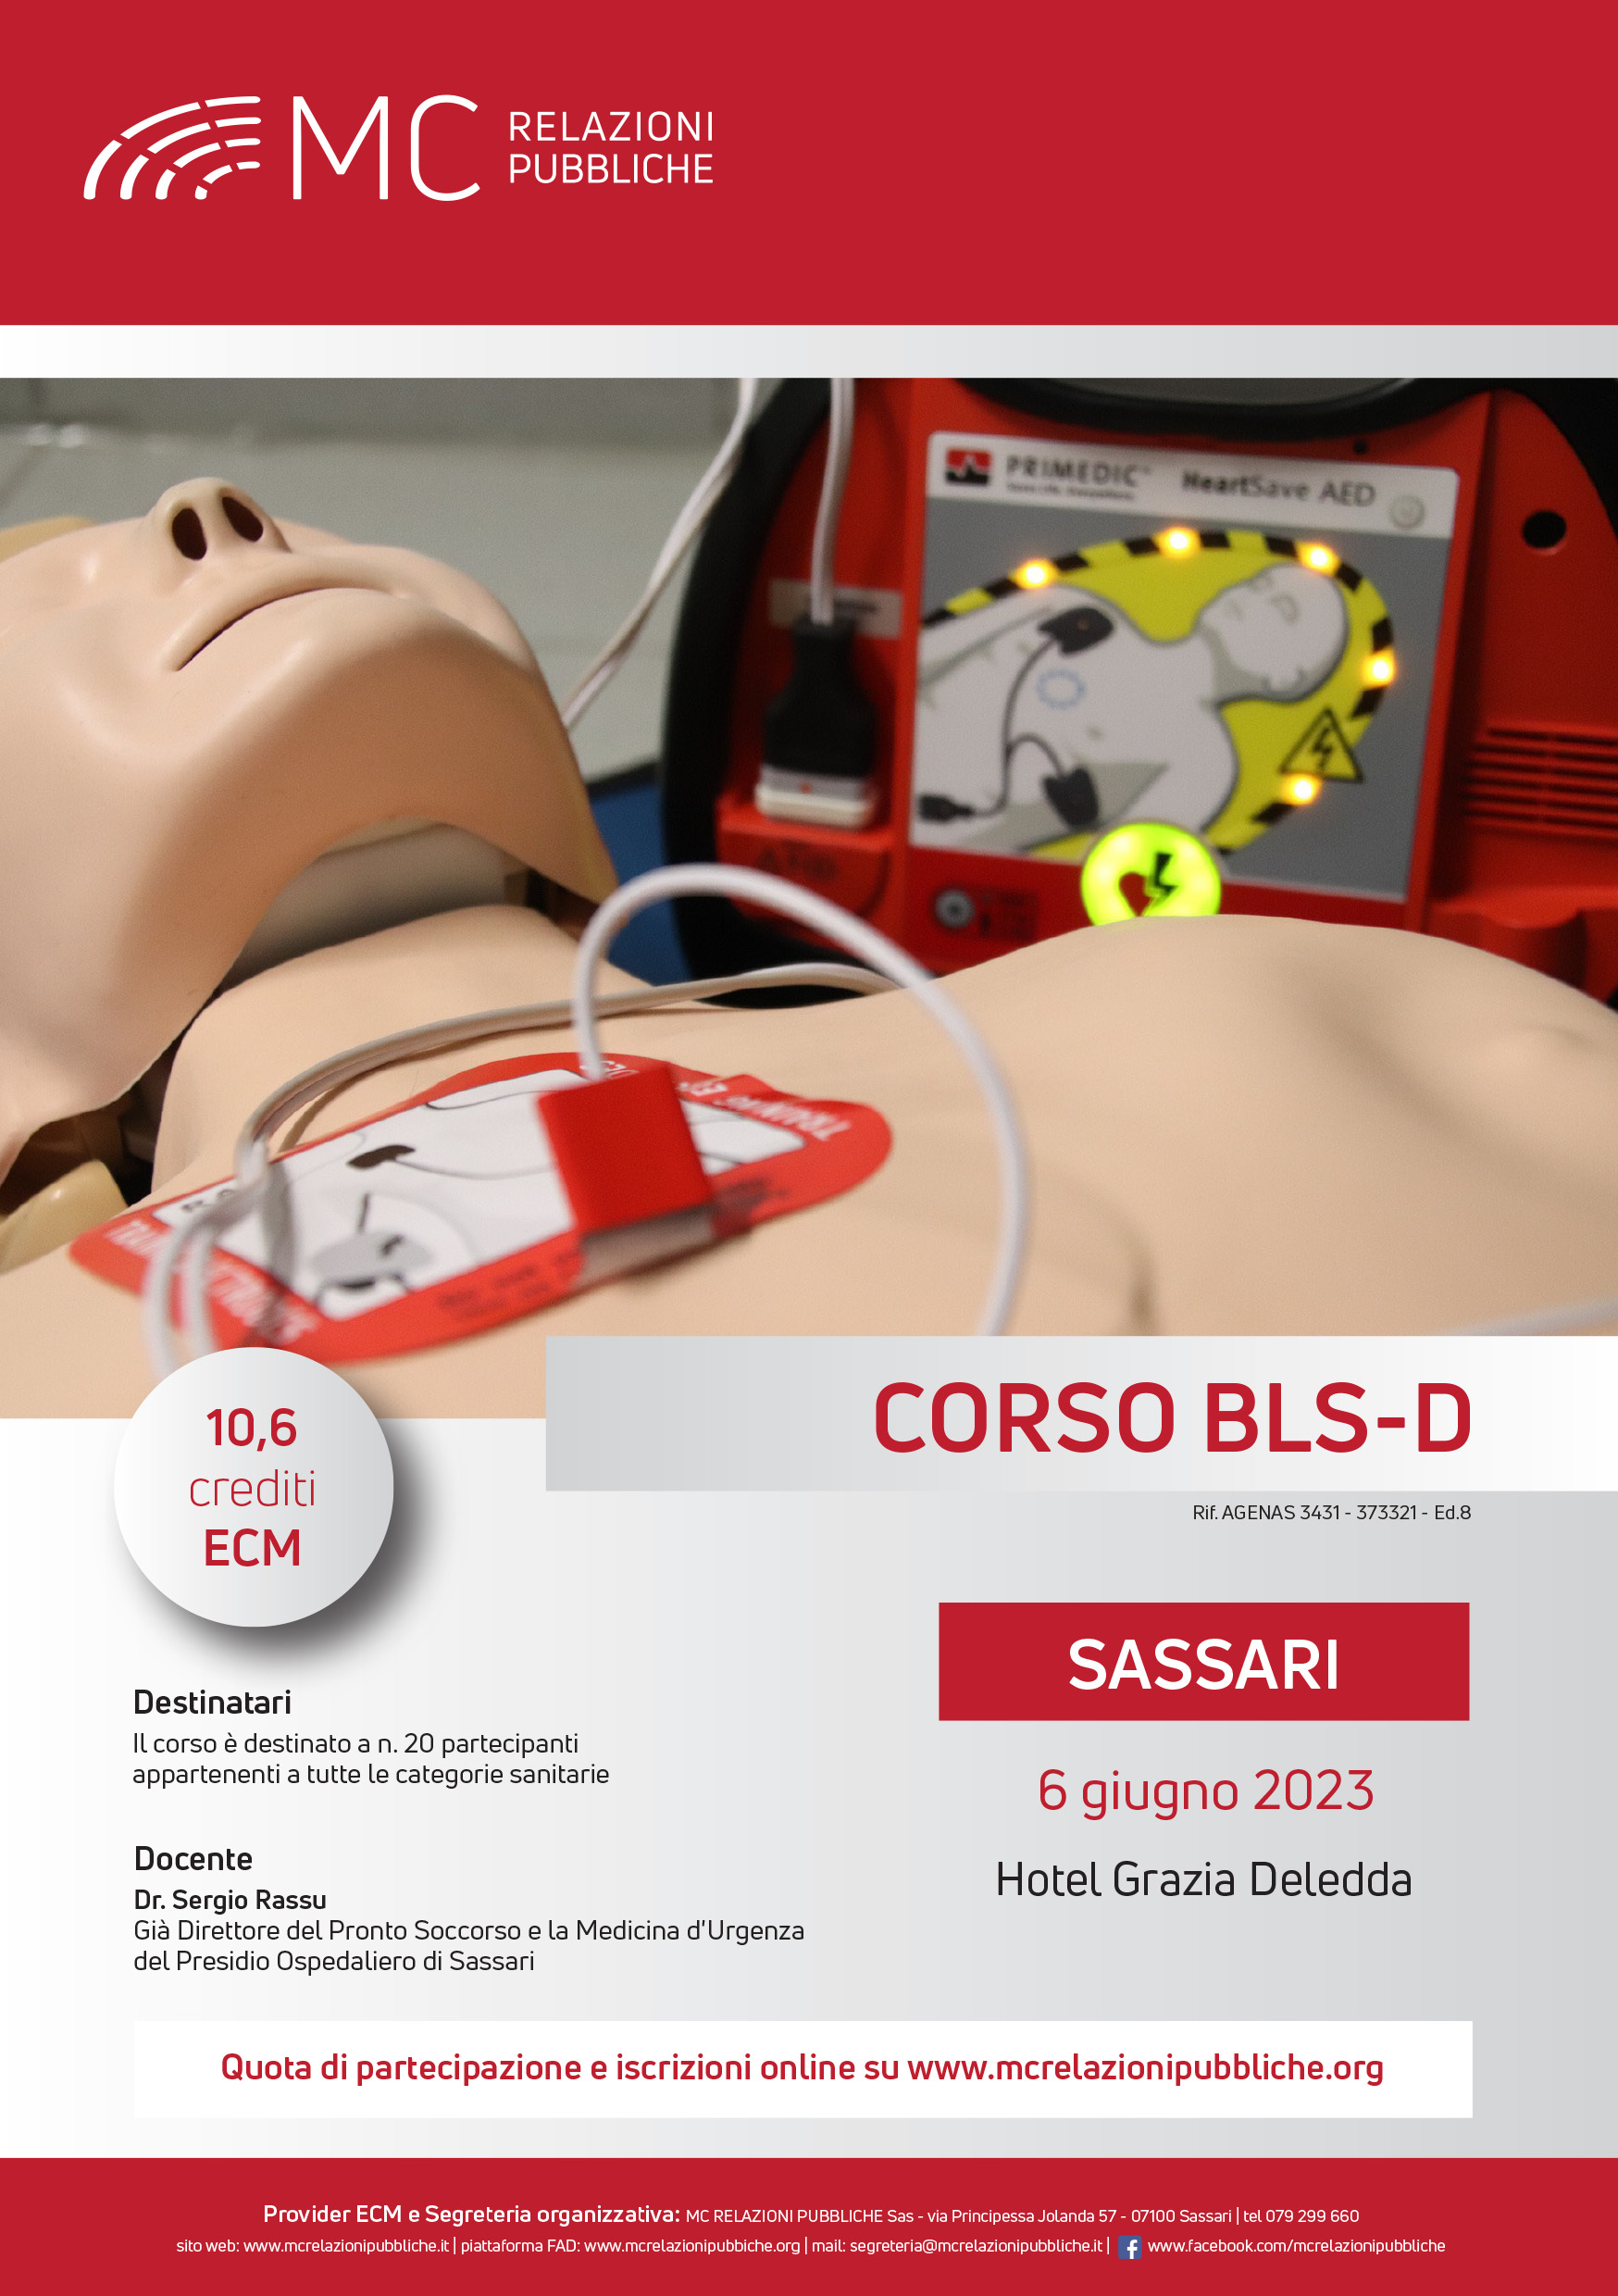 Corso BLS-D. Basic life support-defibrillation ed.8